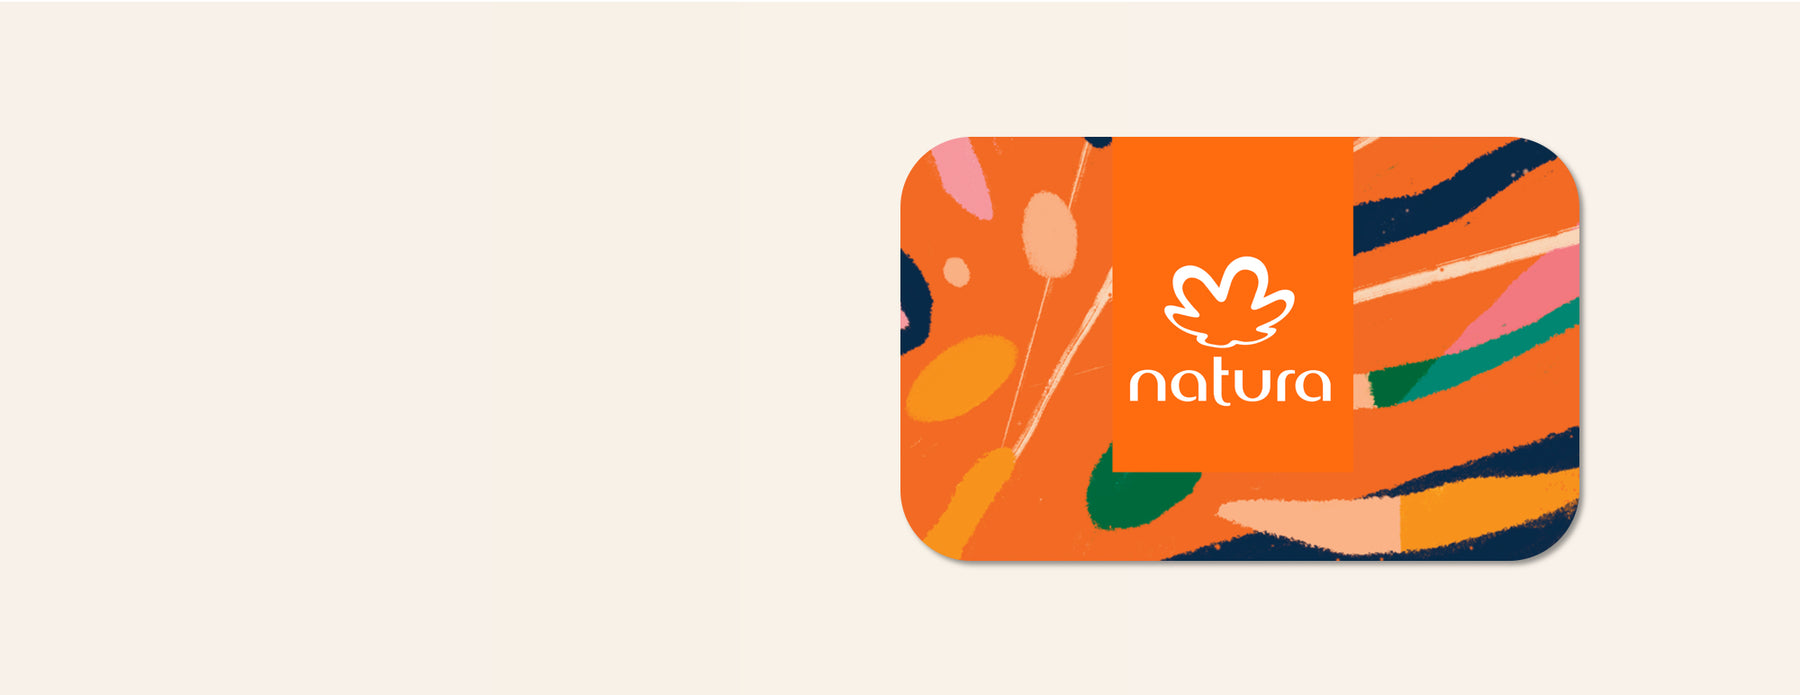 Natura e-gift cards